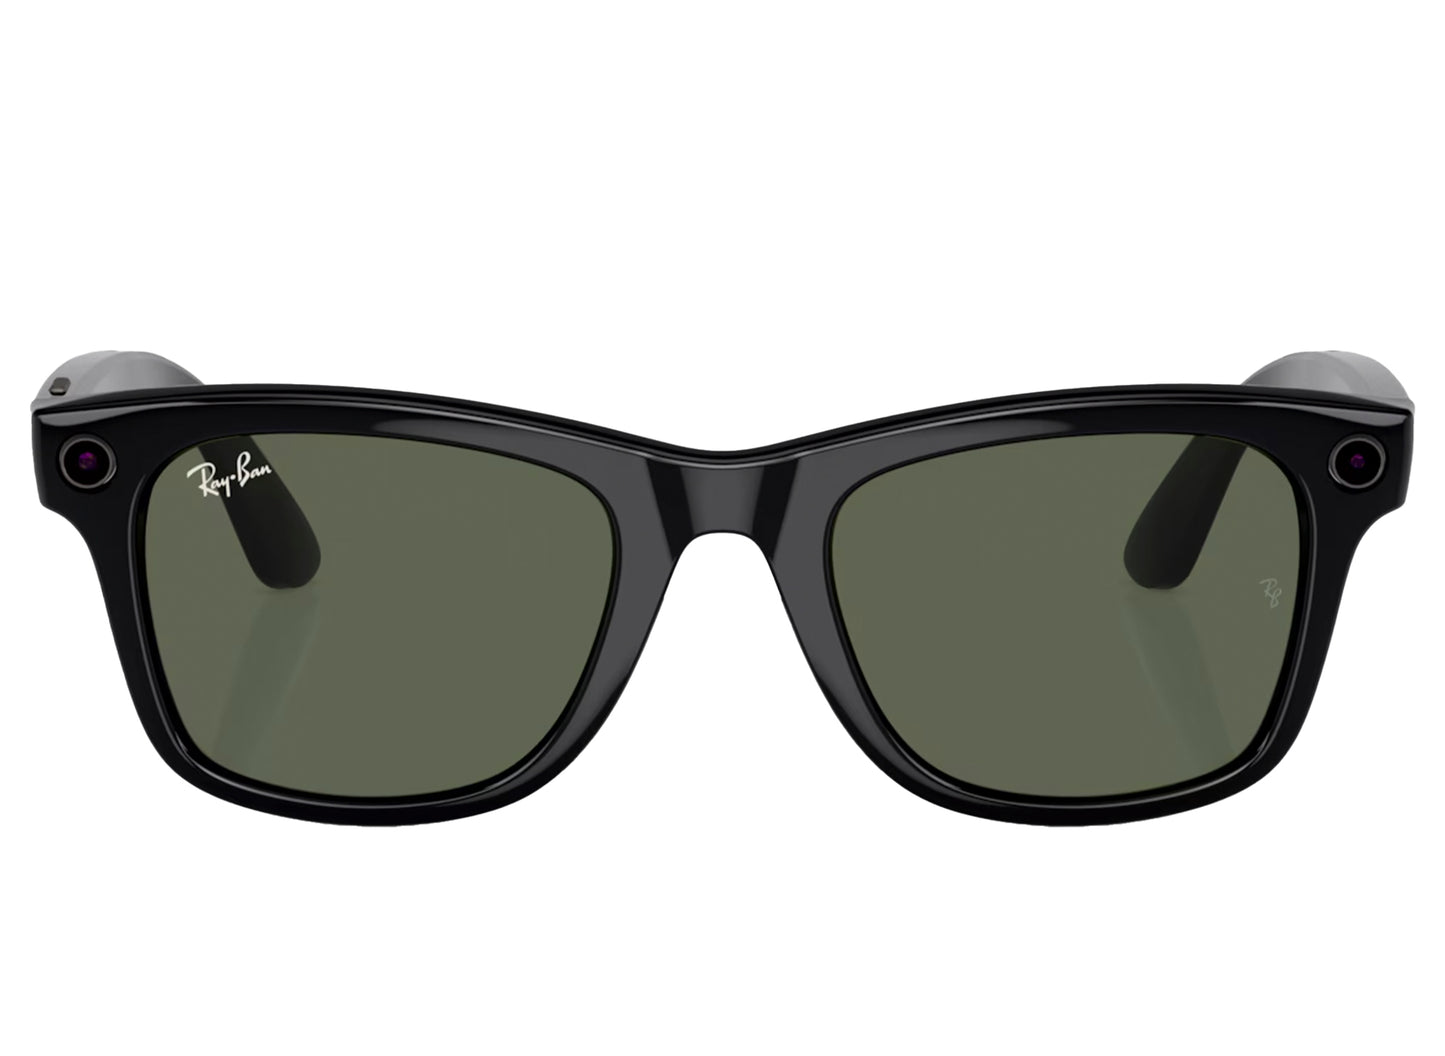 Ray-Ban Meta Wayfarer Sunglasses in Shiny Black w/ G15 Green Lenses xld